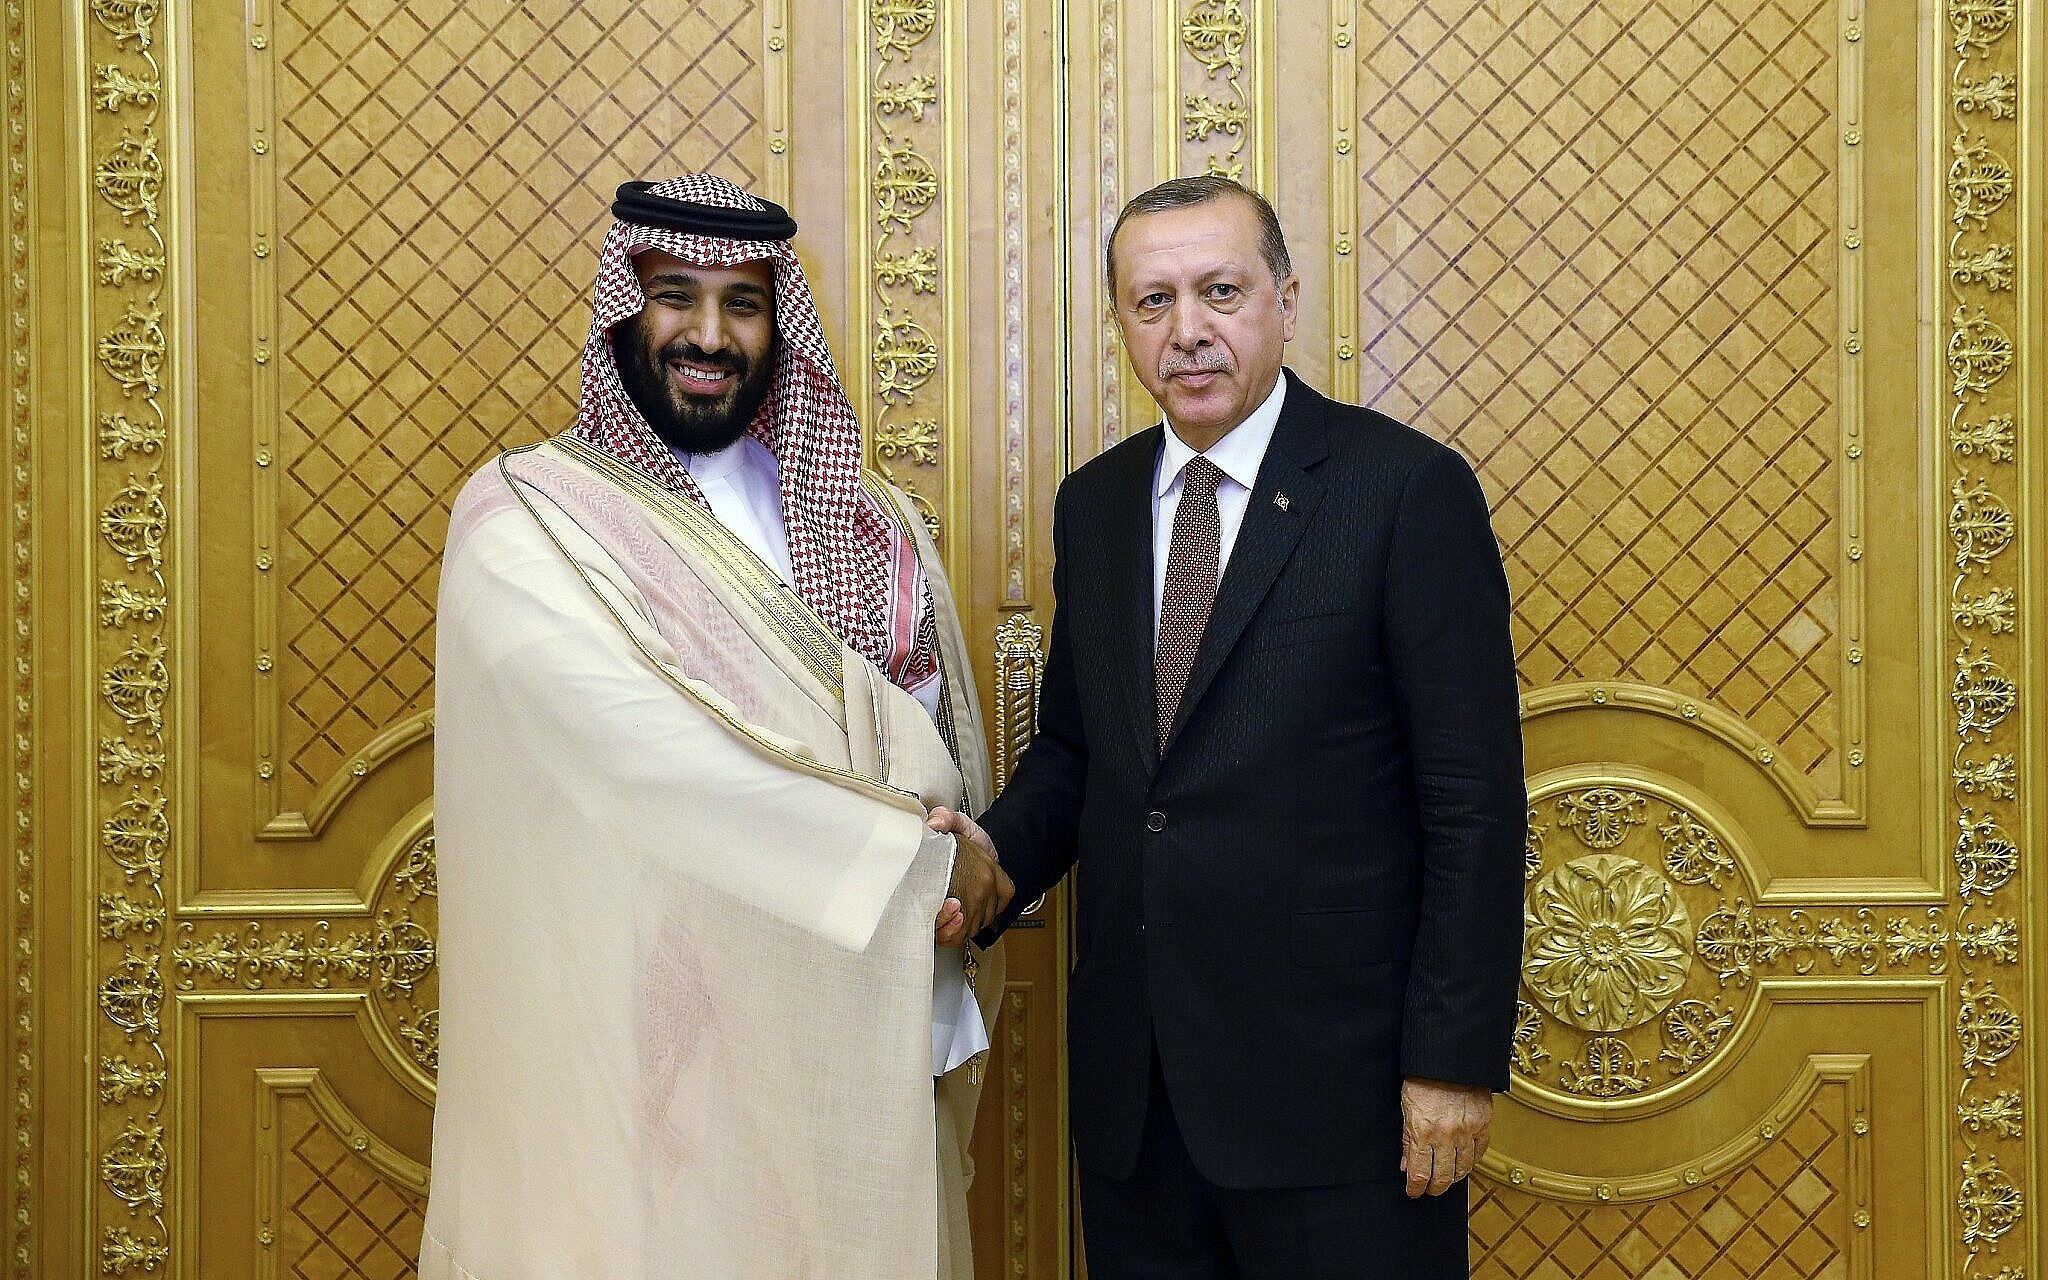 Erdogan to visit Riyadh for first trip since Khashoggi killing | The Times of Israel